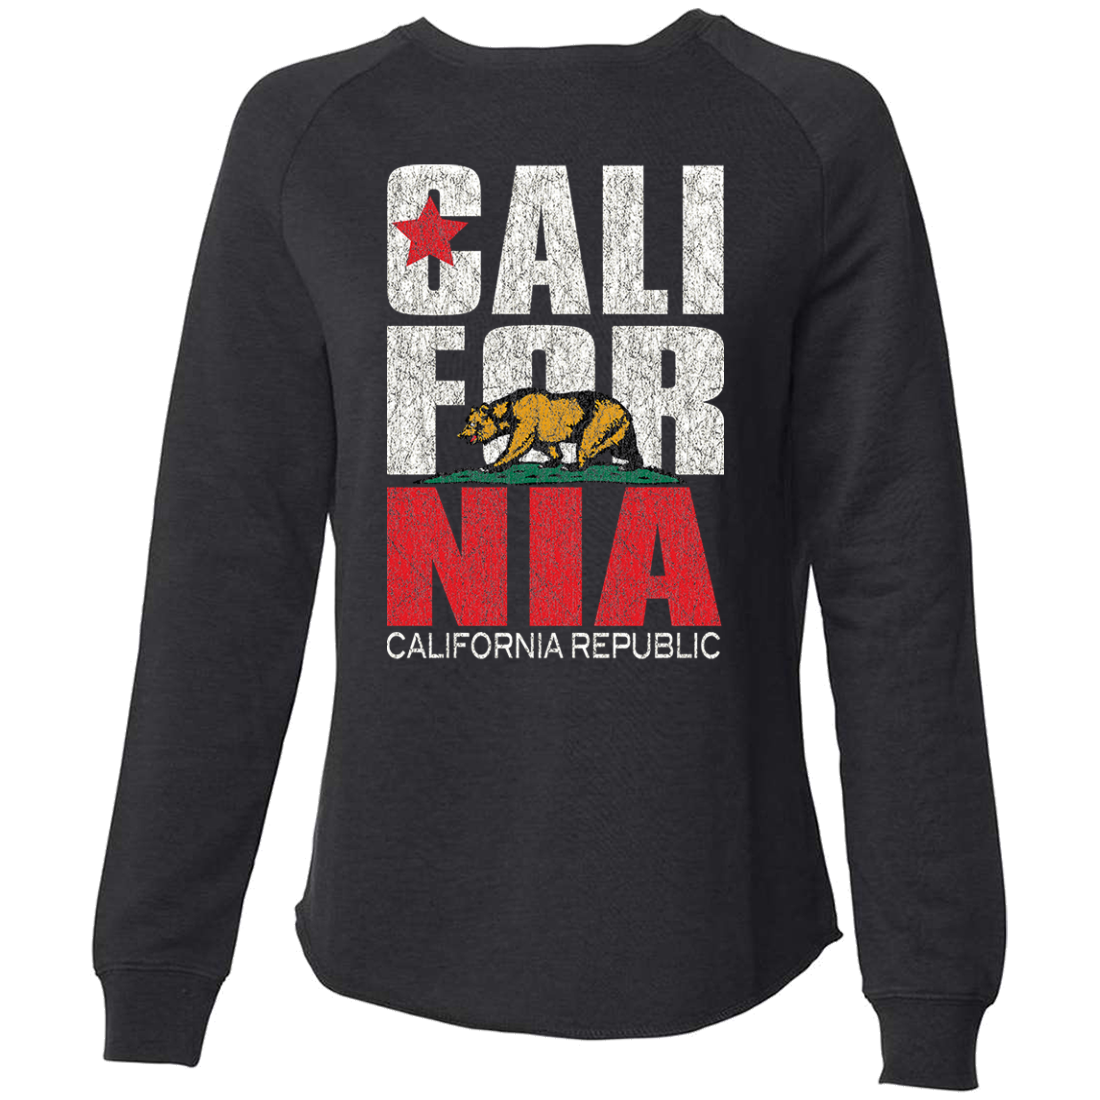 California Republic Vintage Retro Super Soft Crewneck Sweater